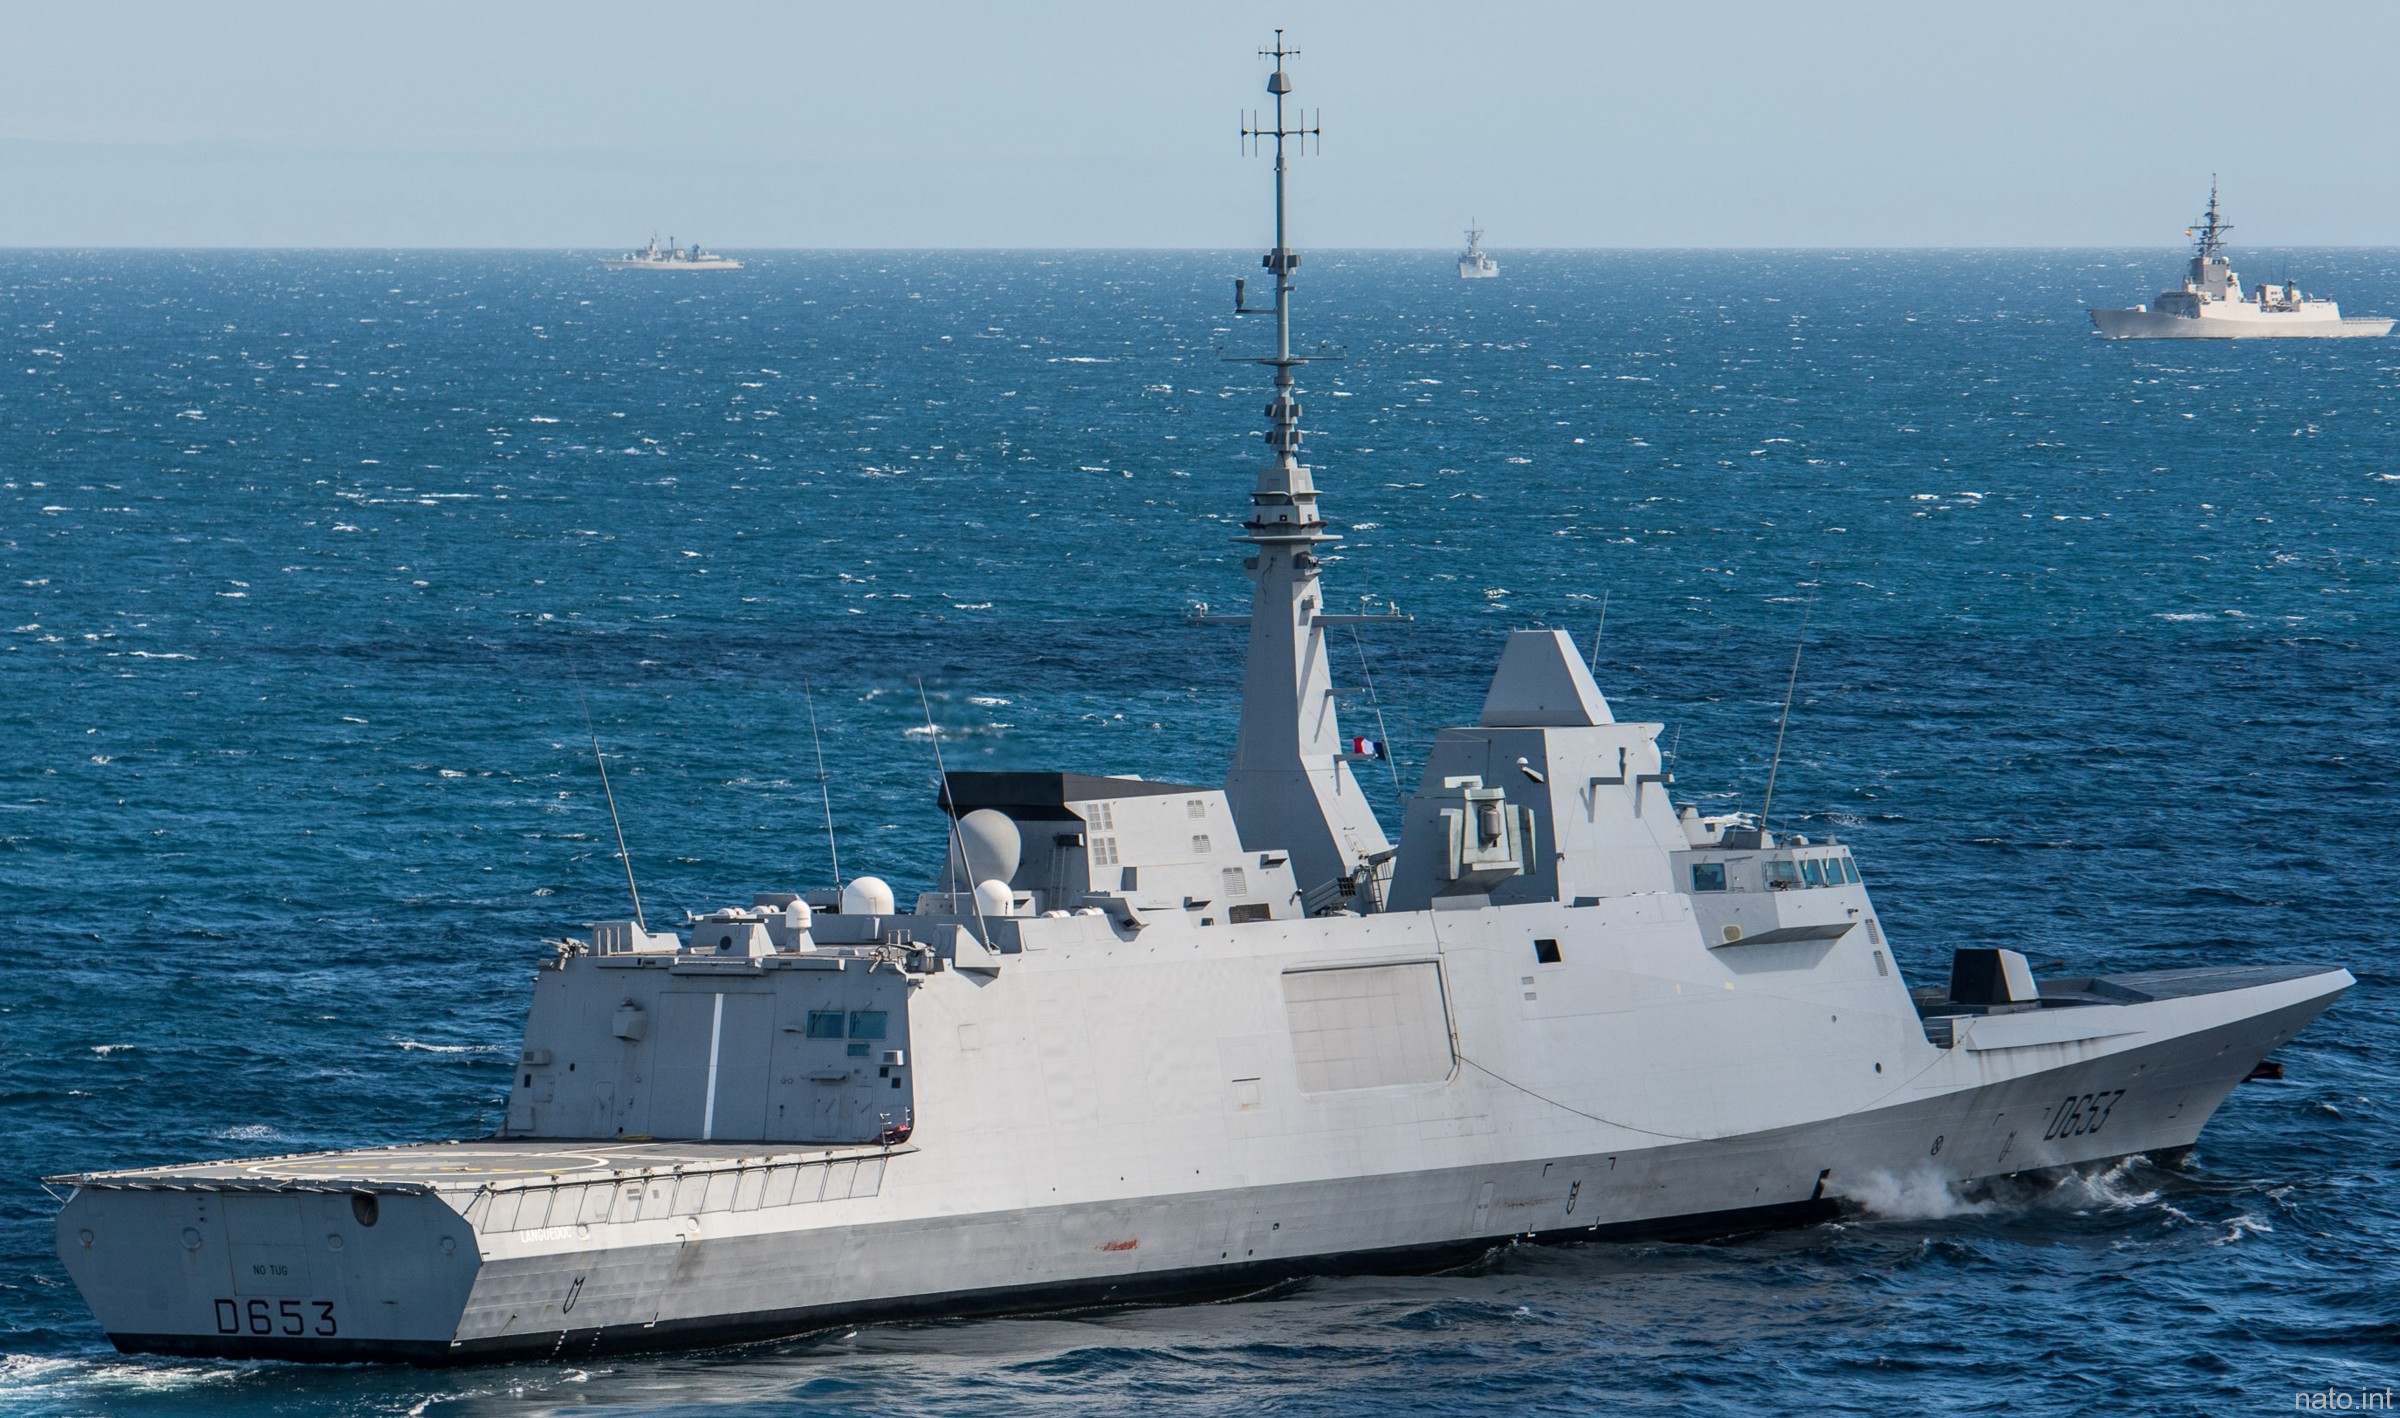 d-653 fs languedoc fremm aquitaine class frigate fregate multi purpose french navy marine nationale 10